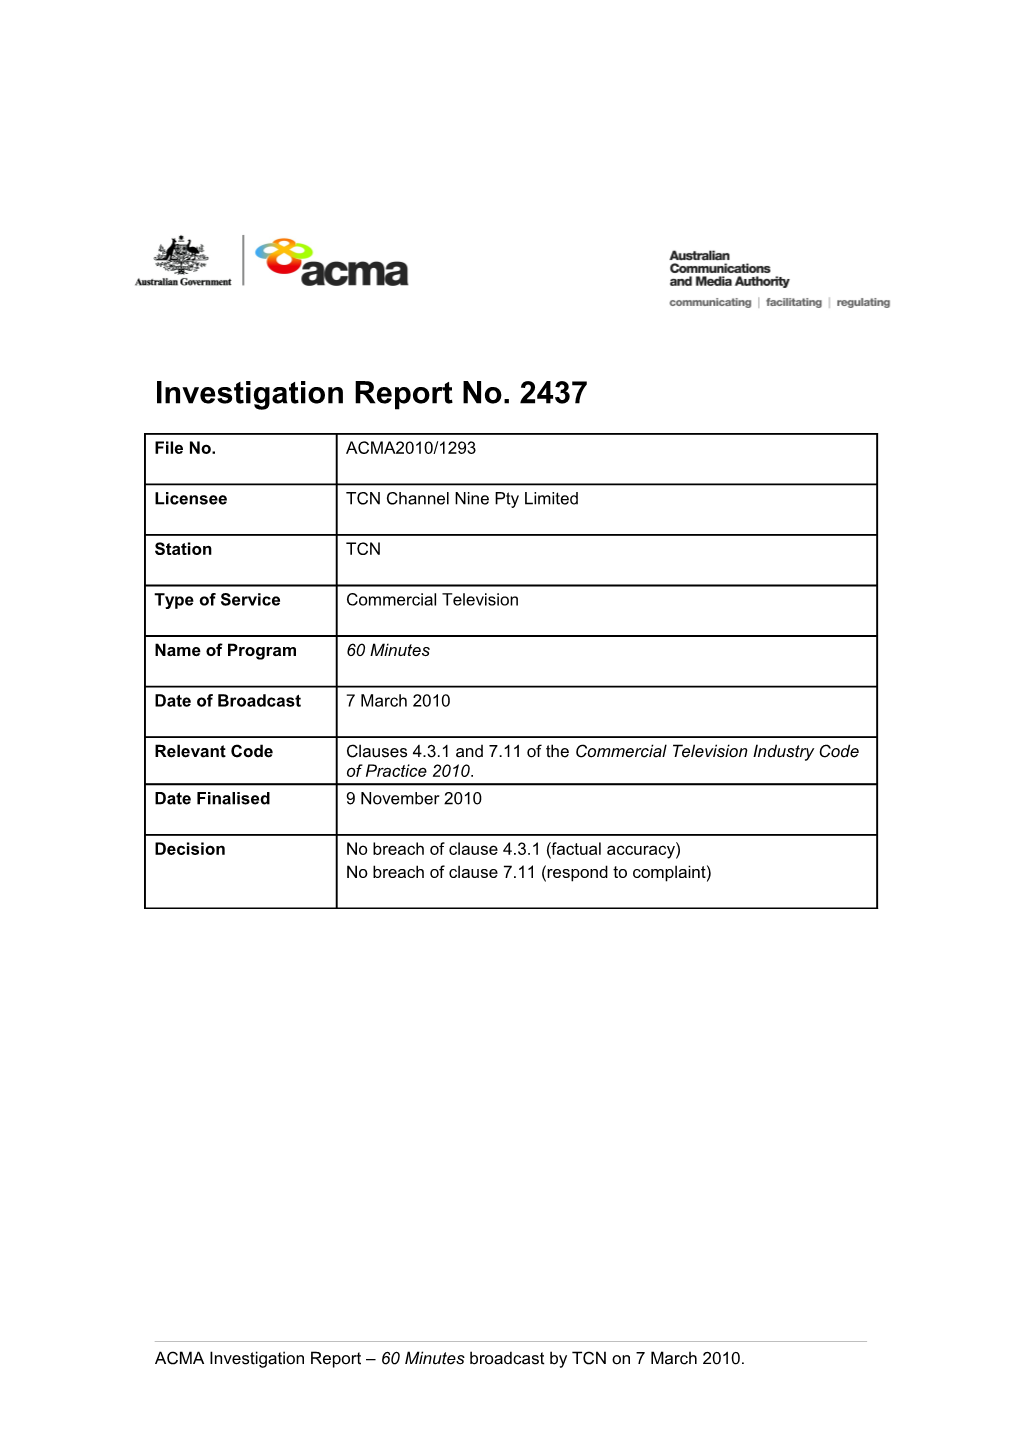 TCN 9 - ACMA Investigation Report 2437